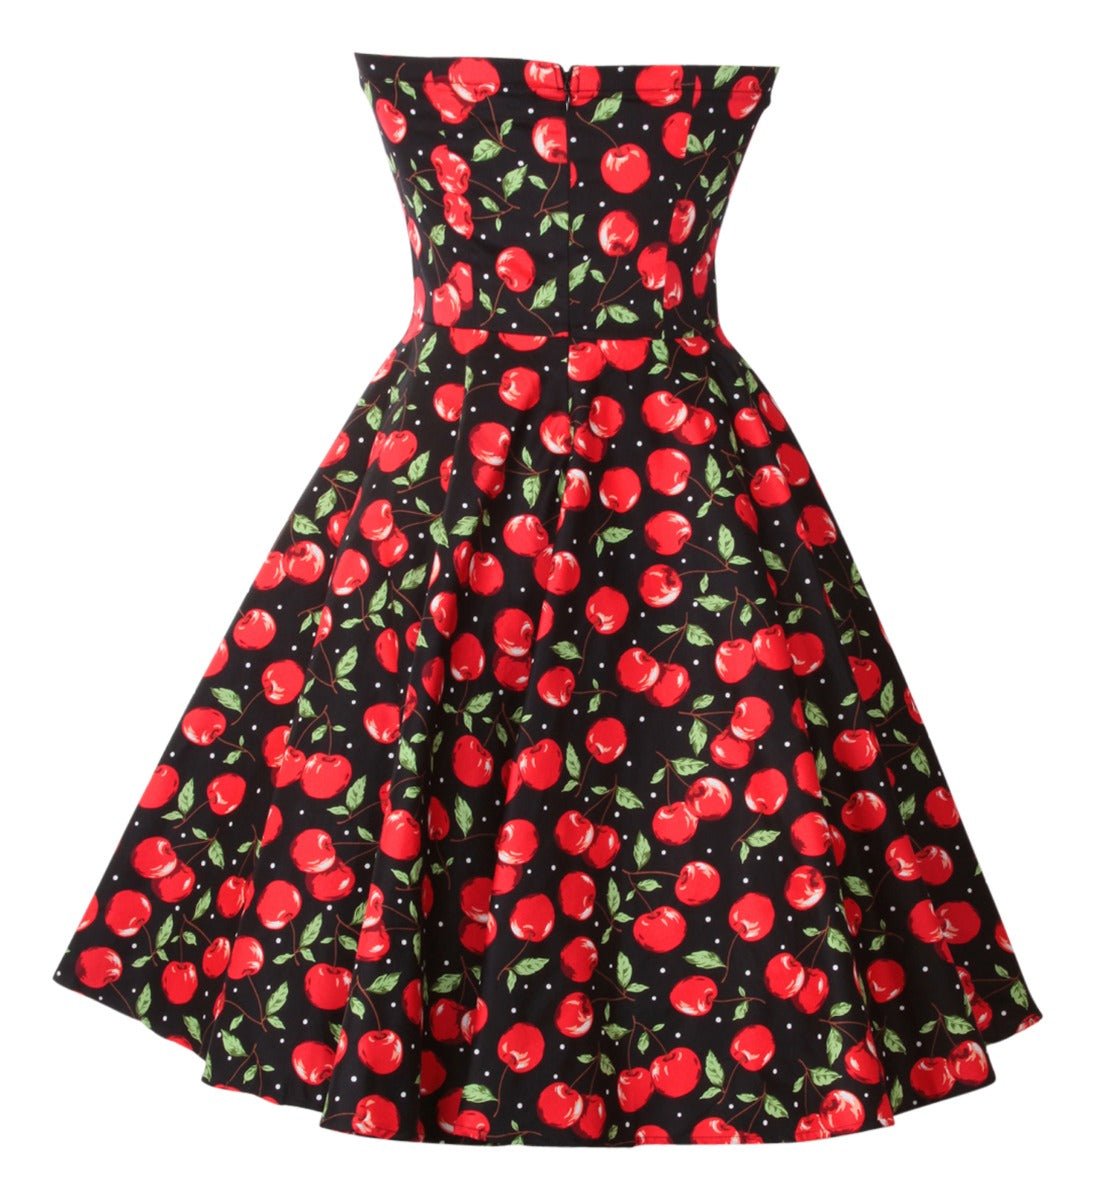 Strapless black red cherry print dress back view